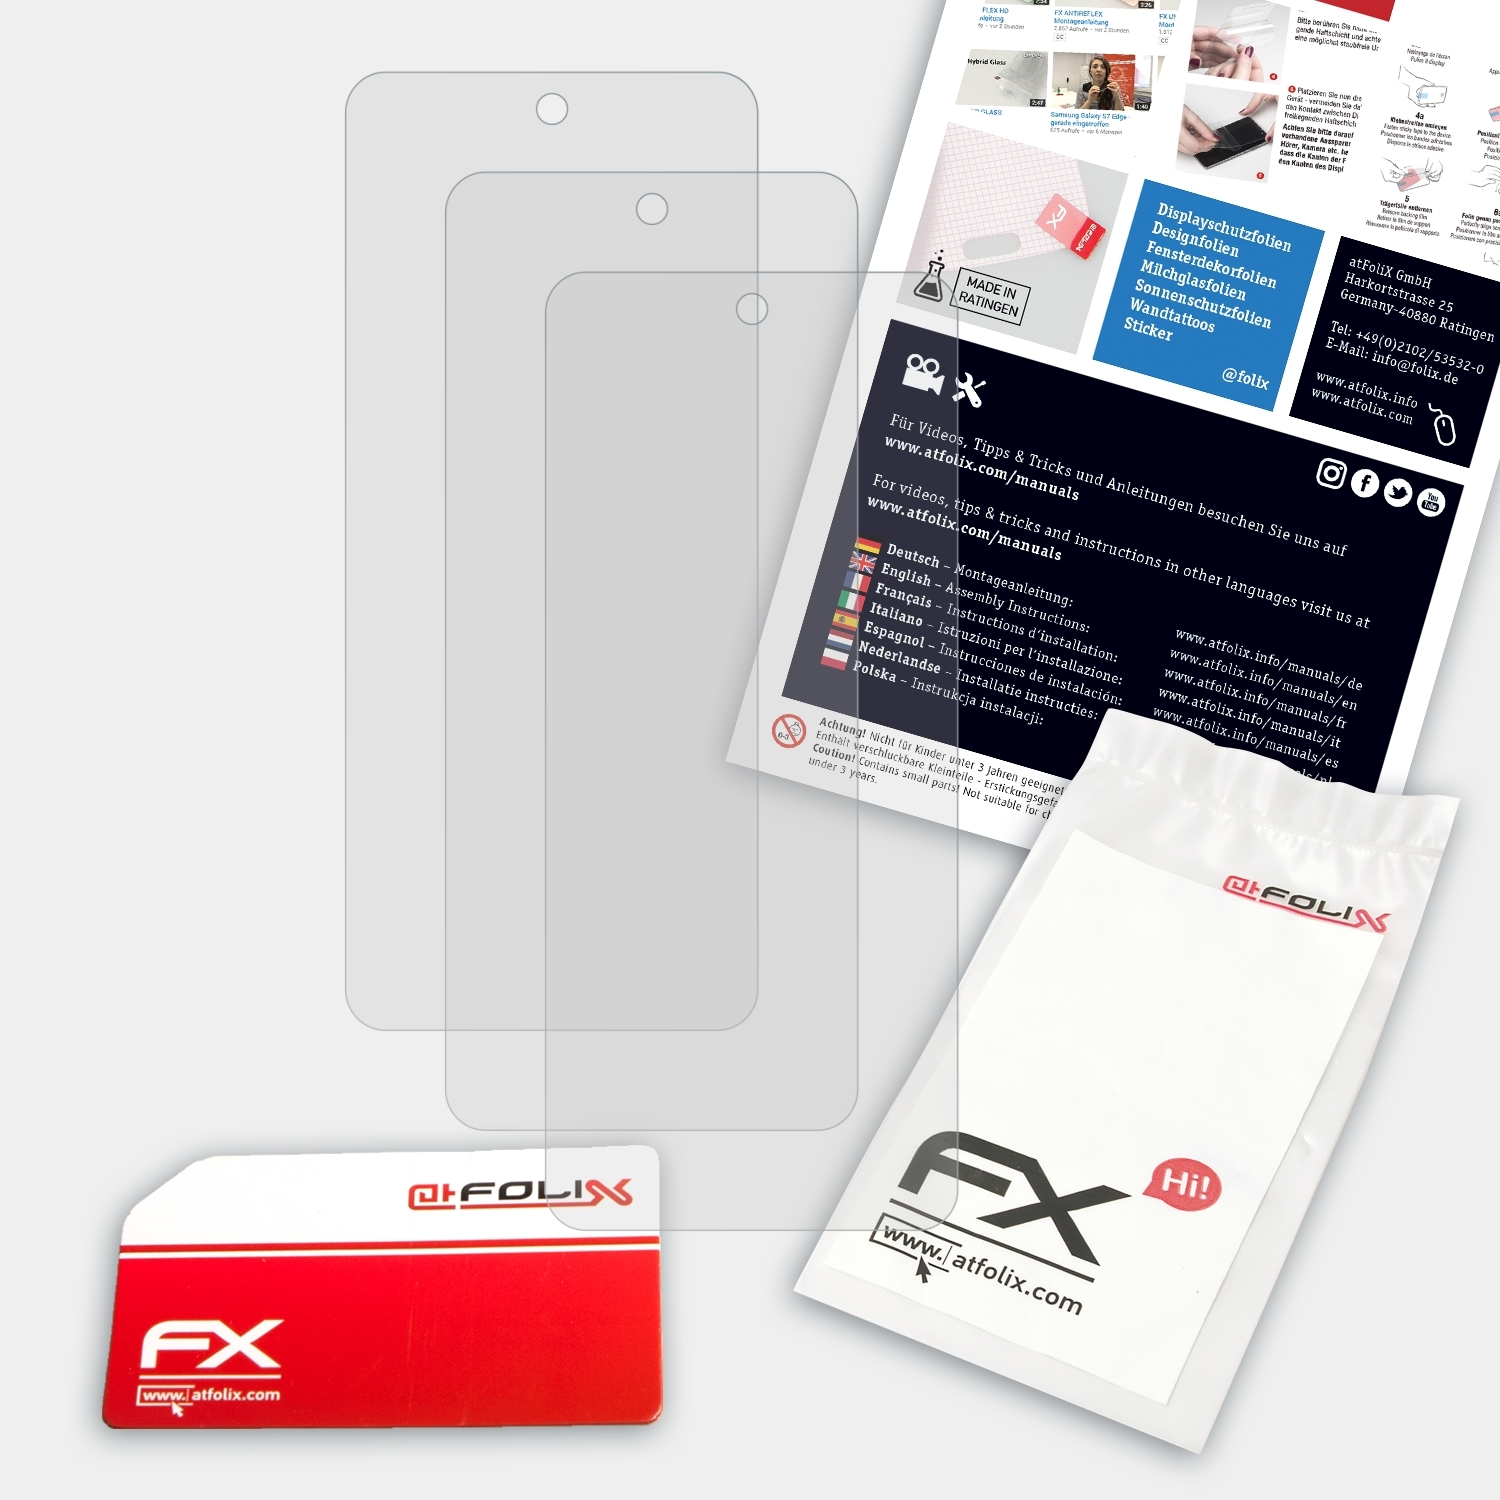 2) ATFOLIX FX-Antireflex Tecno Displayschutz(für 3x Pova